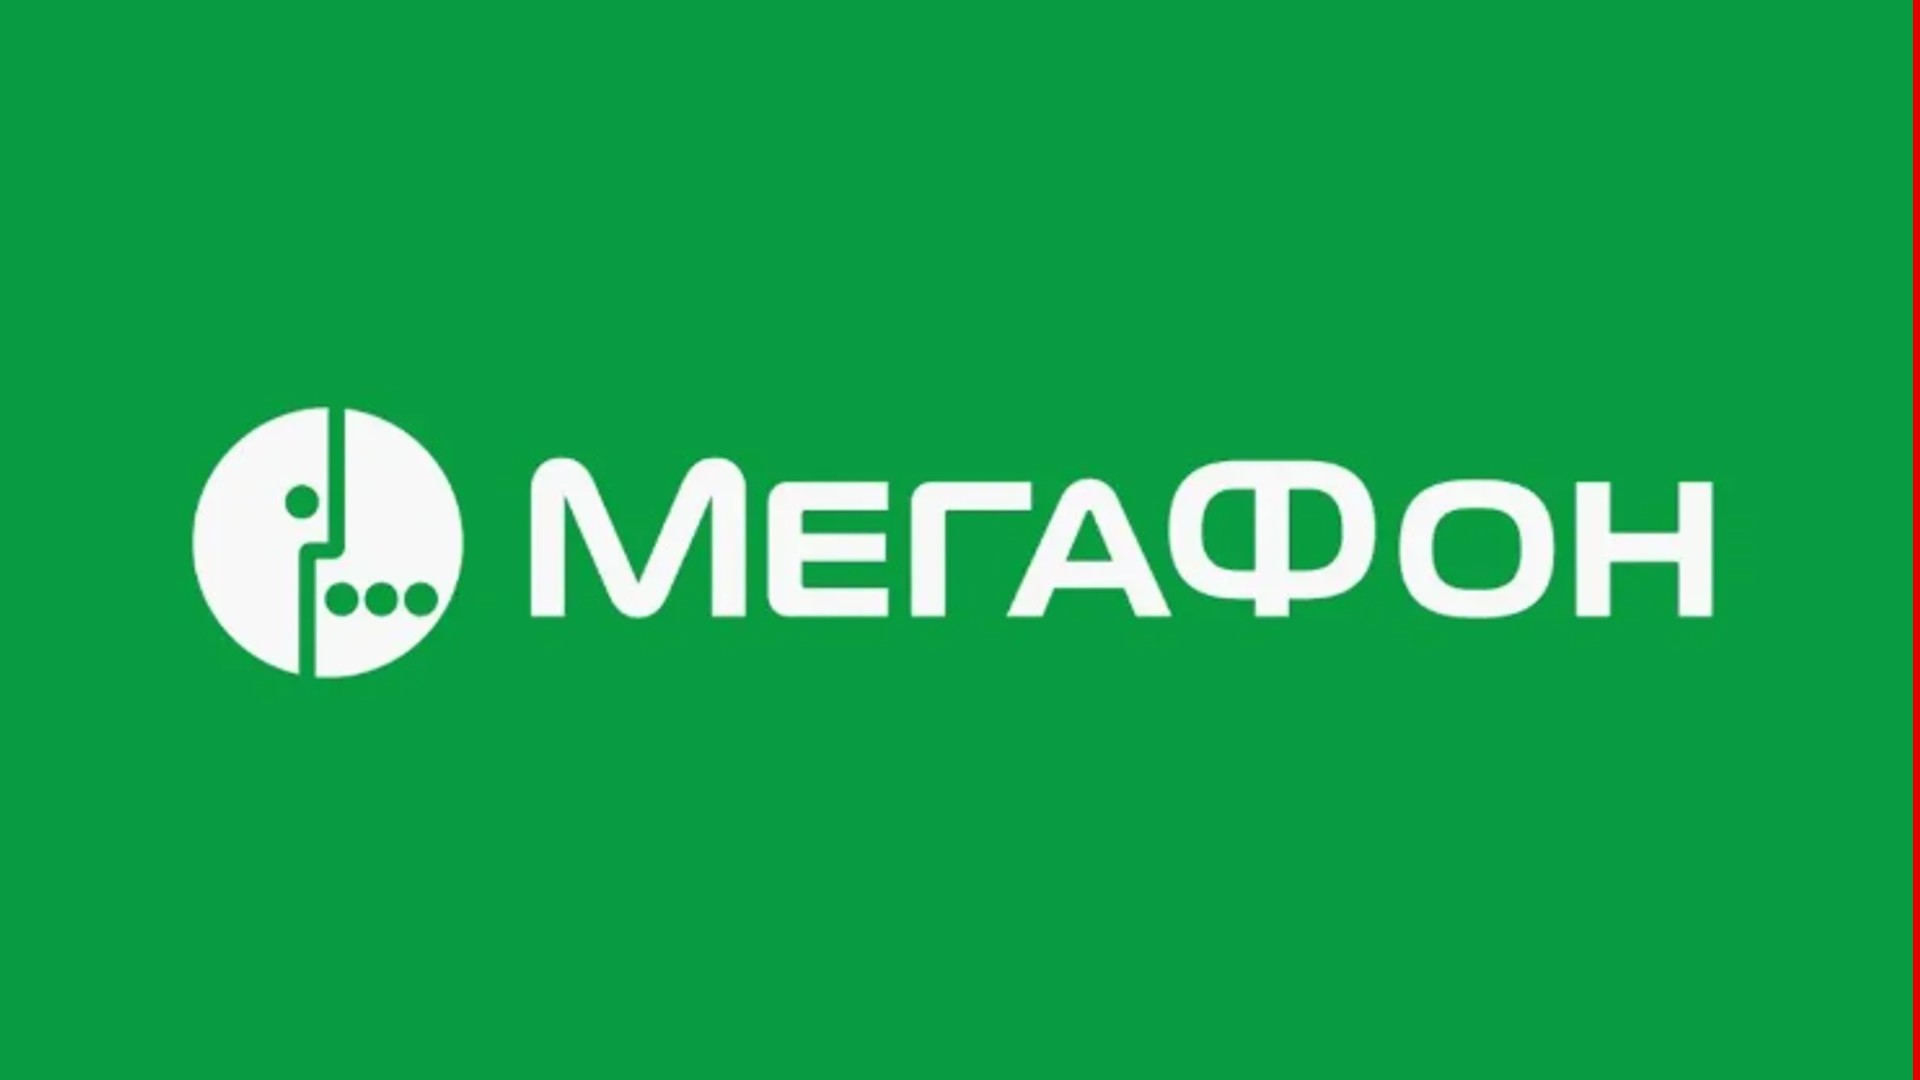 Установить значок мегафона. МЕГАФОН. МЕГАФОН лого. МЕГАФОН логотип новый. Мегафлот логотип.